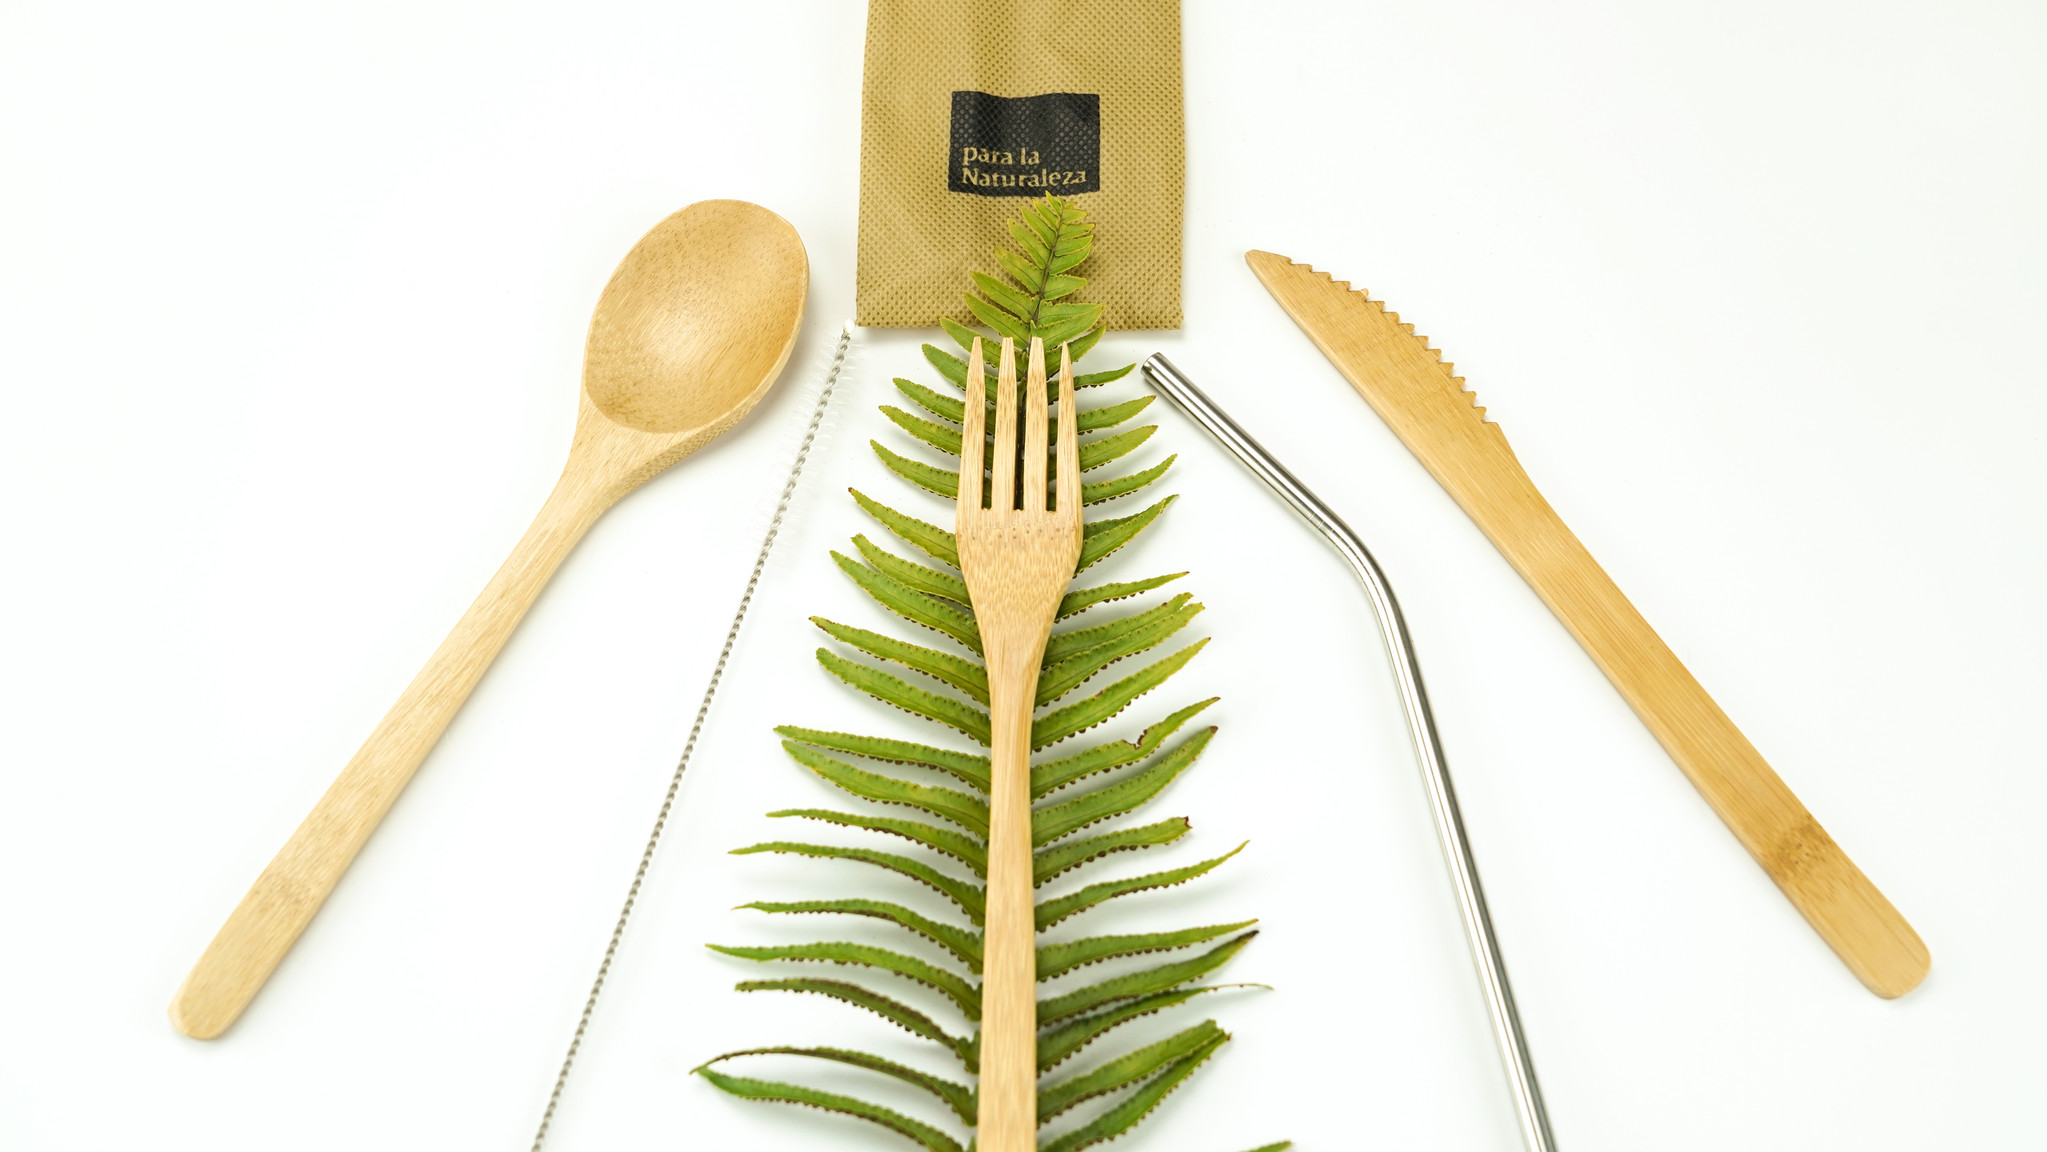 Conjunto de utensilios de bambú  con sorbeto